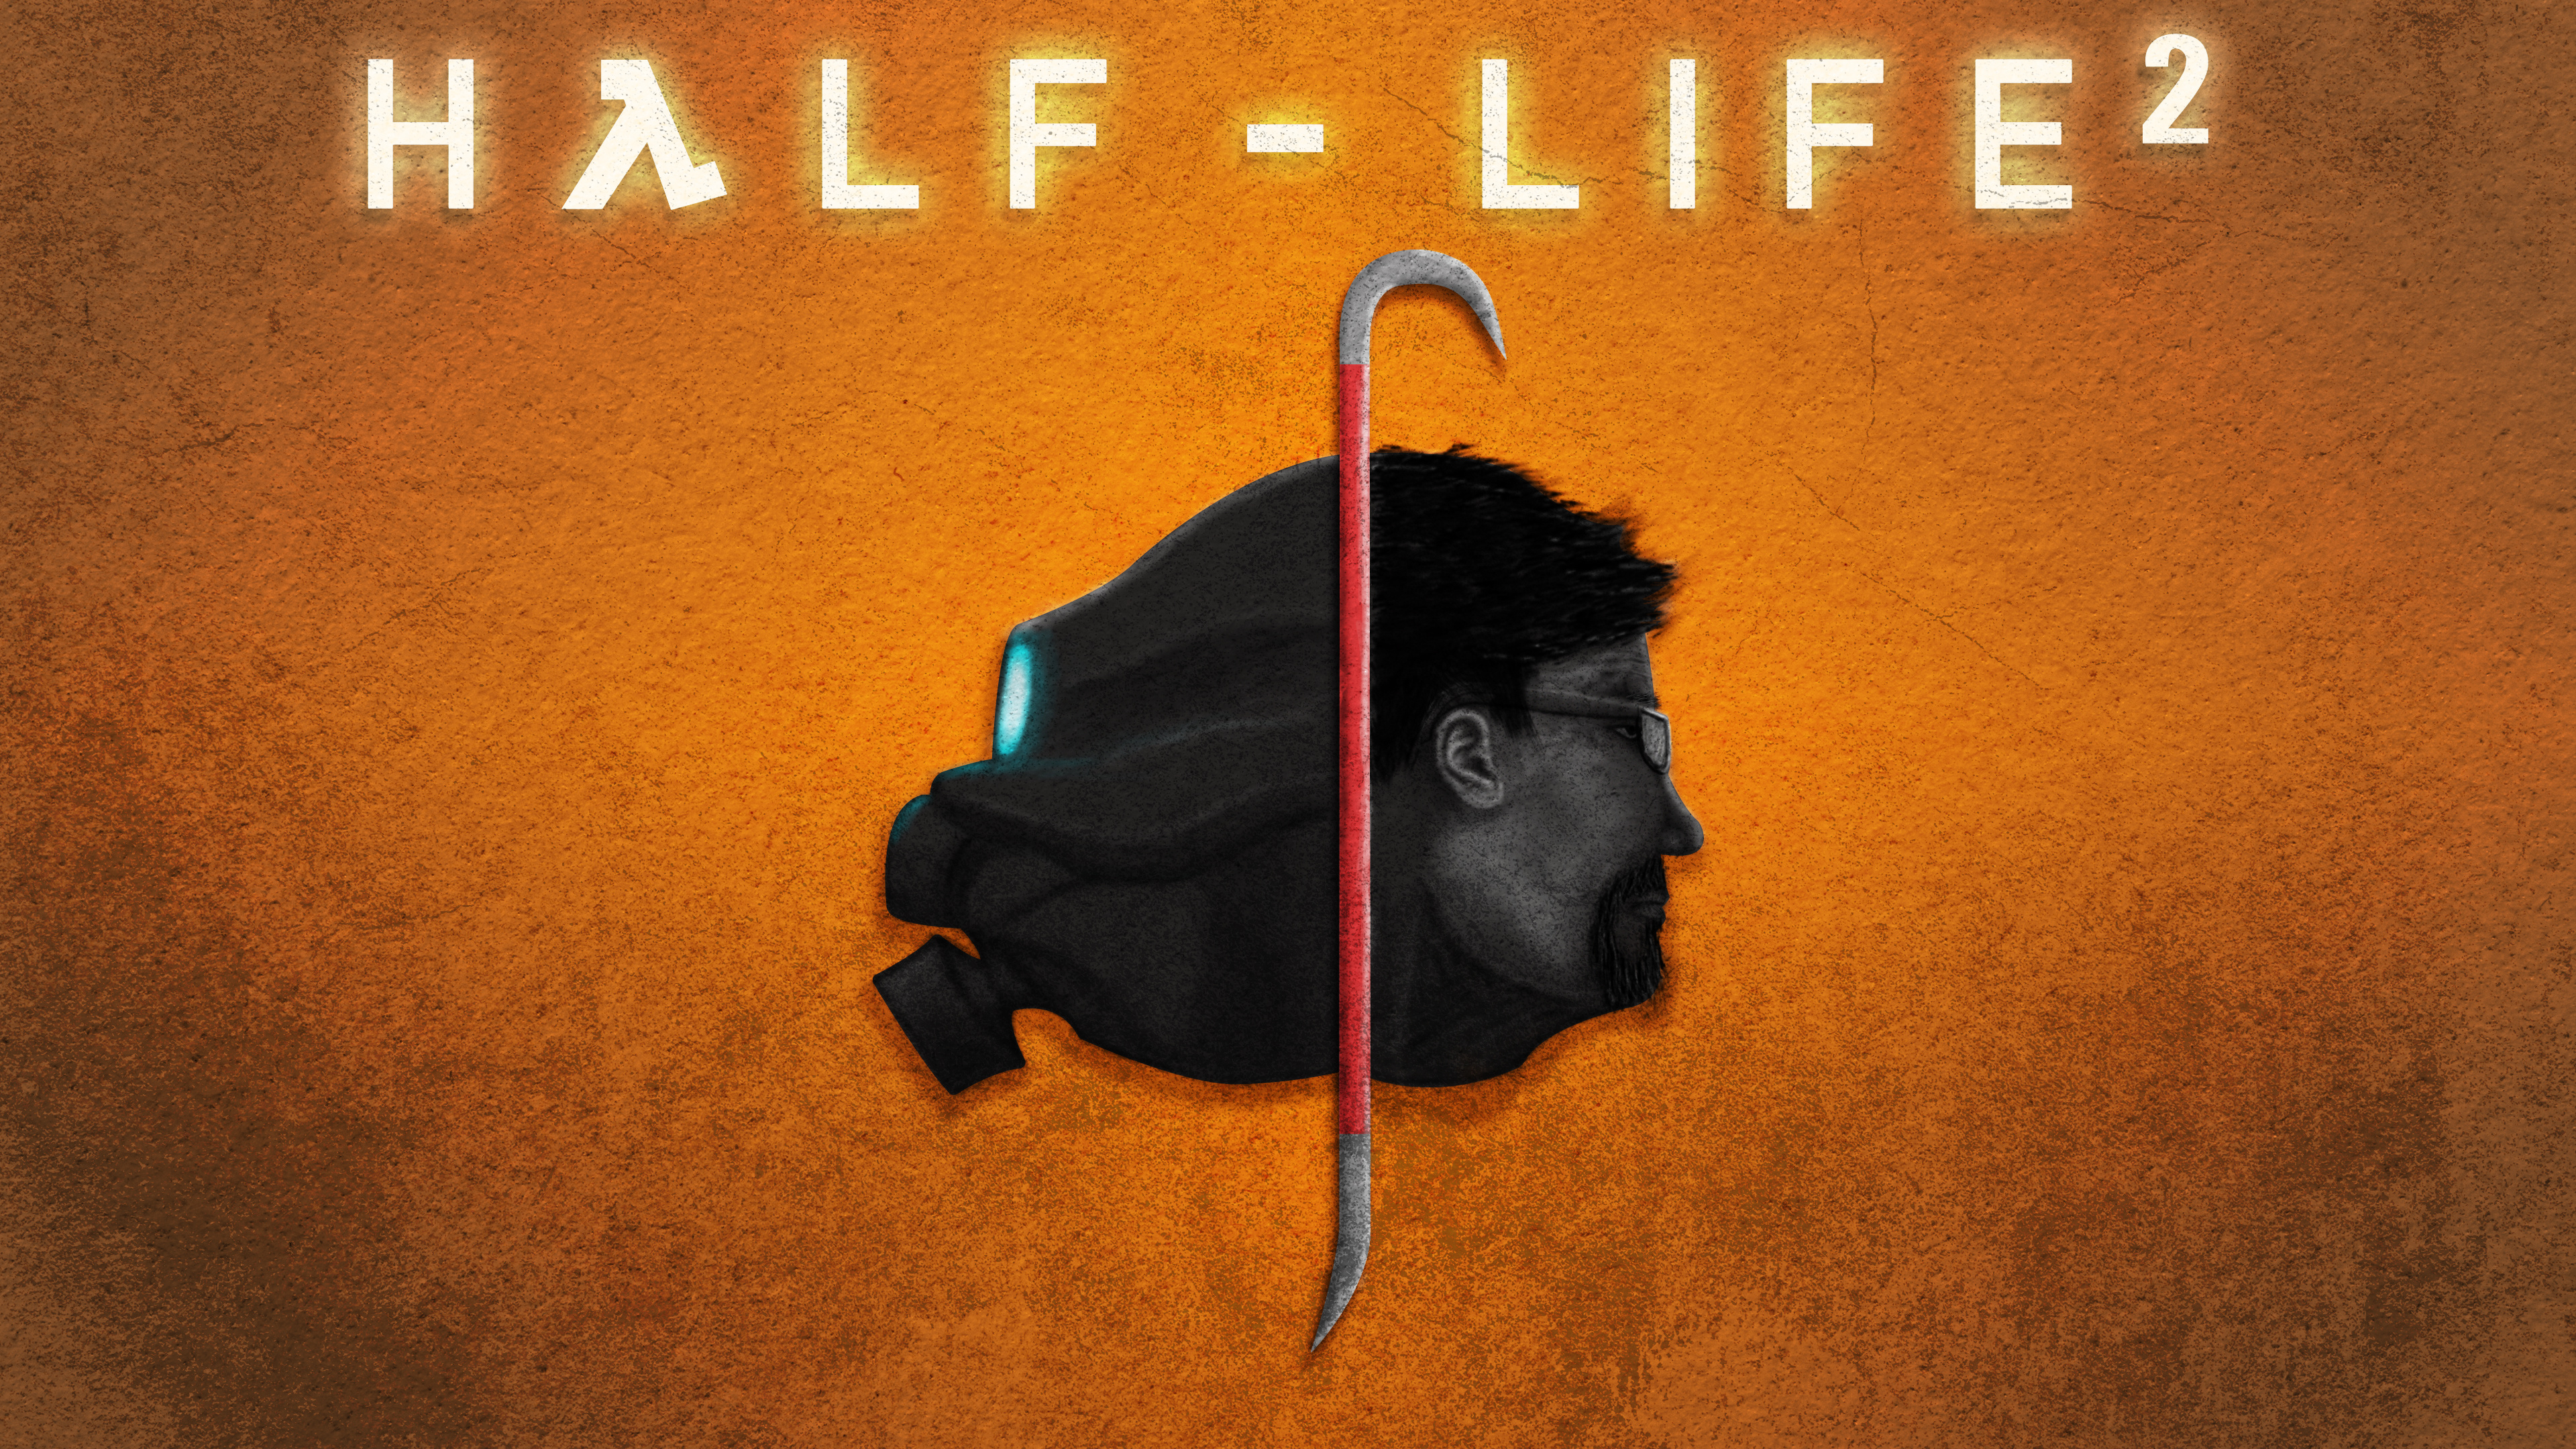 Half-Life 2, Stunning 4K wallpapers, Game visuals, Sci-Fi ambiance, 3840x2160 4K Desktop